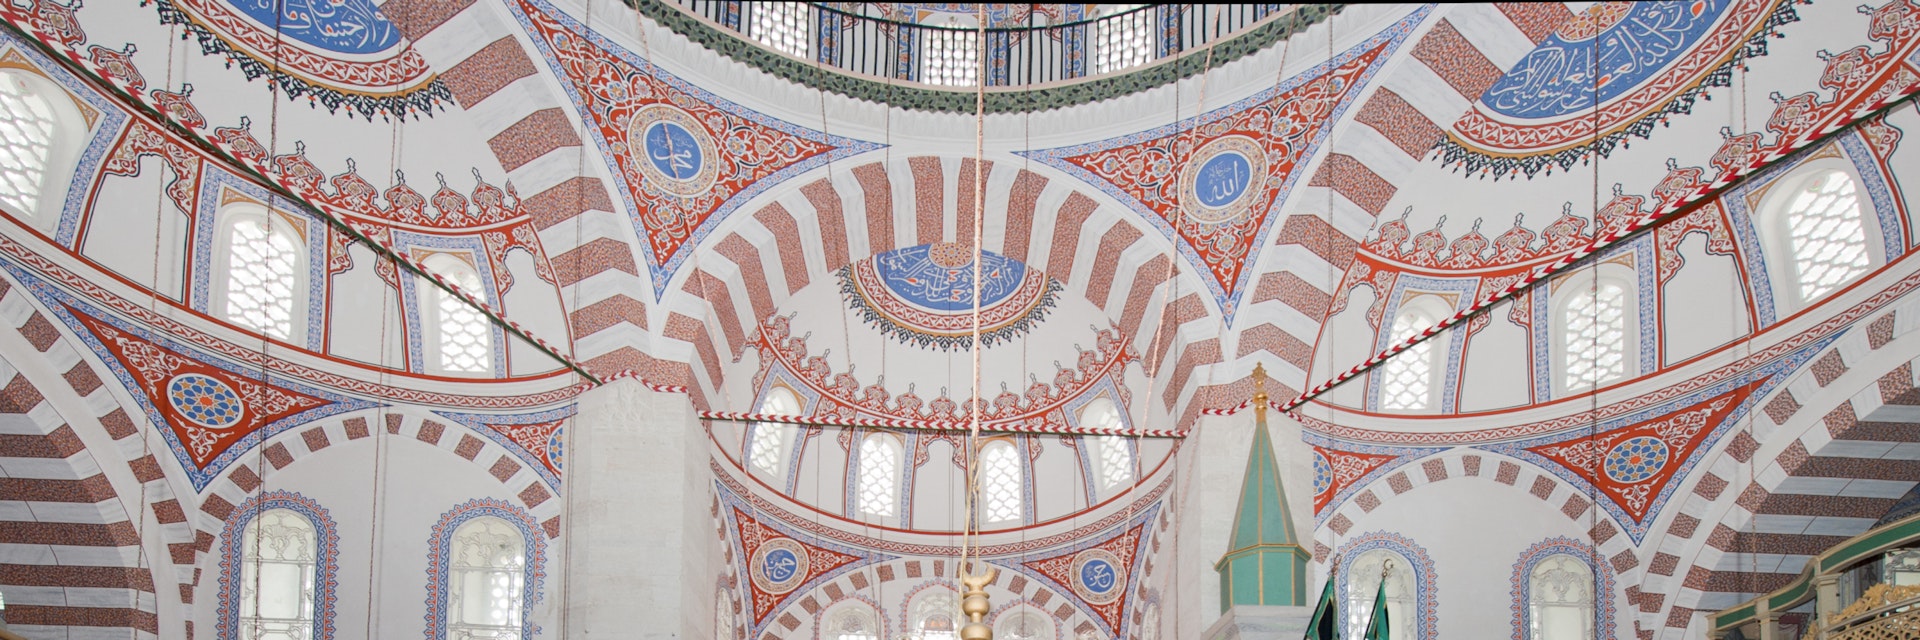 Atik Valide mosque